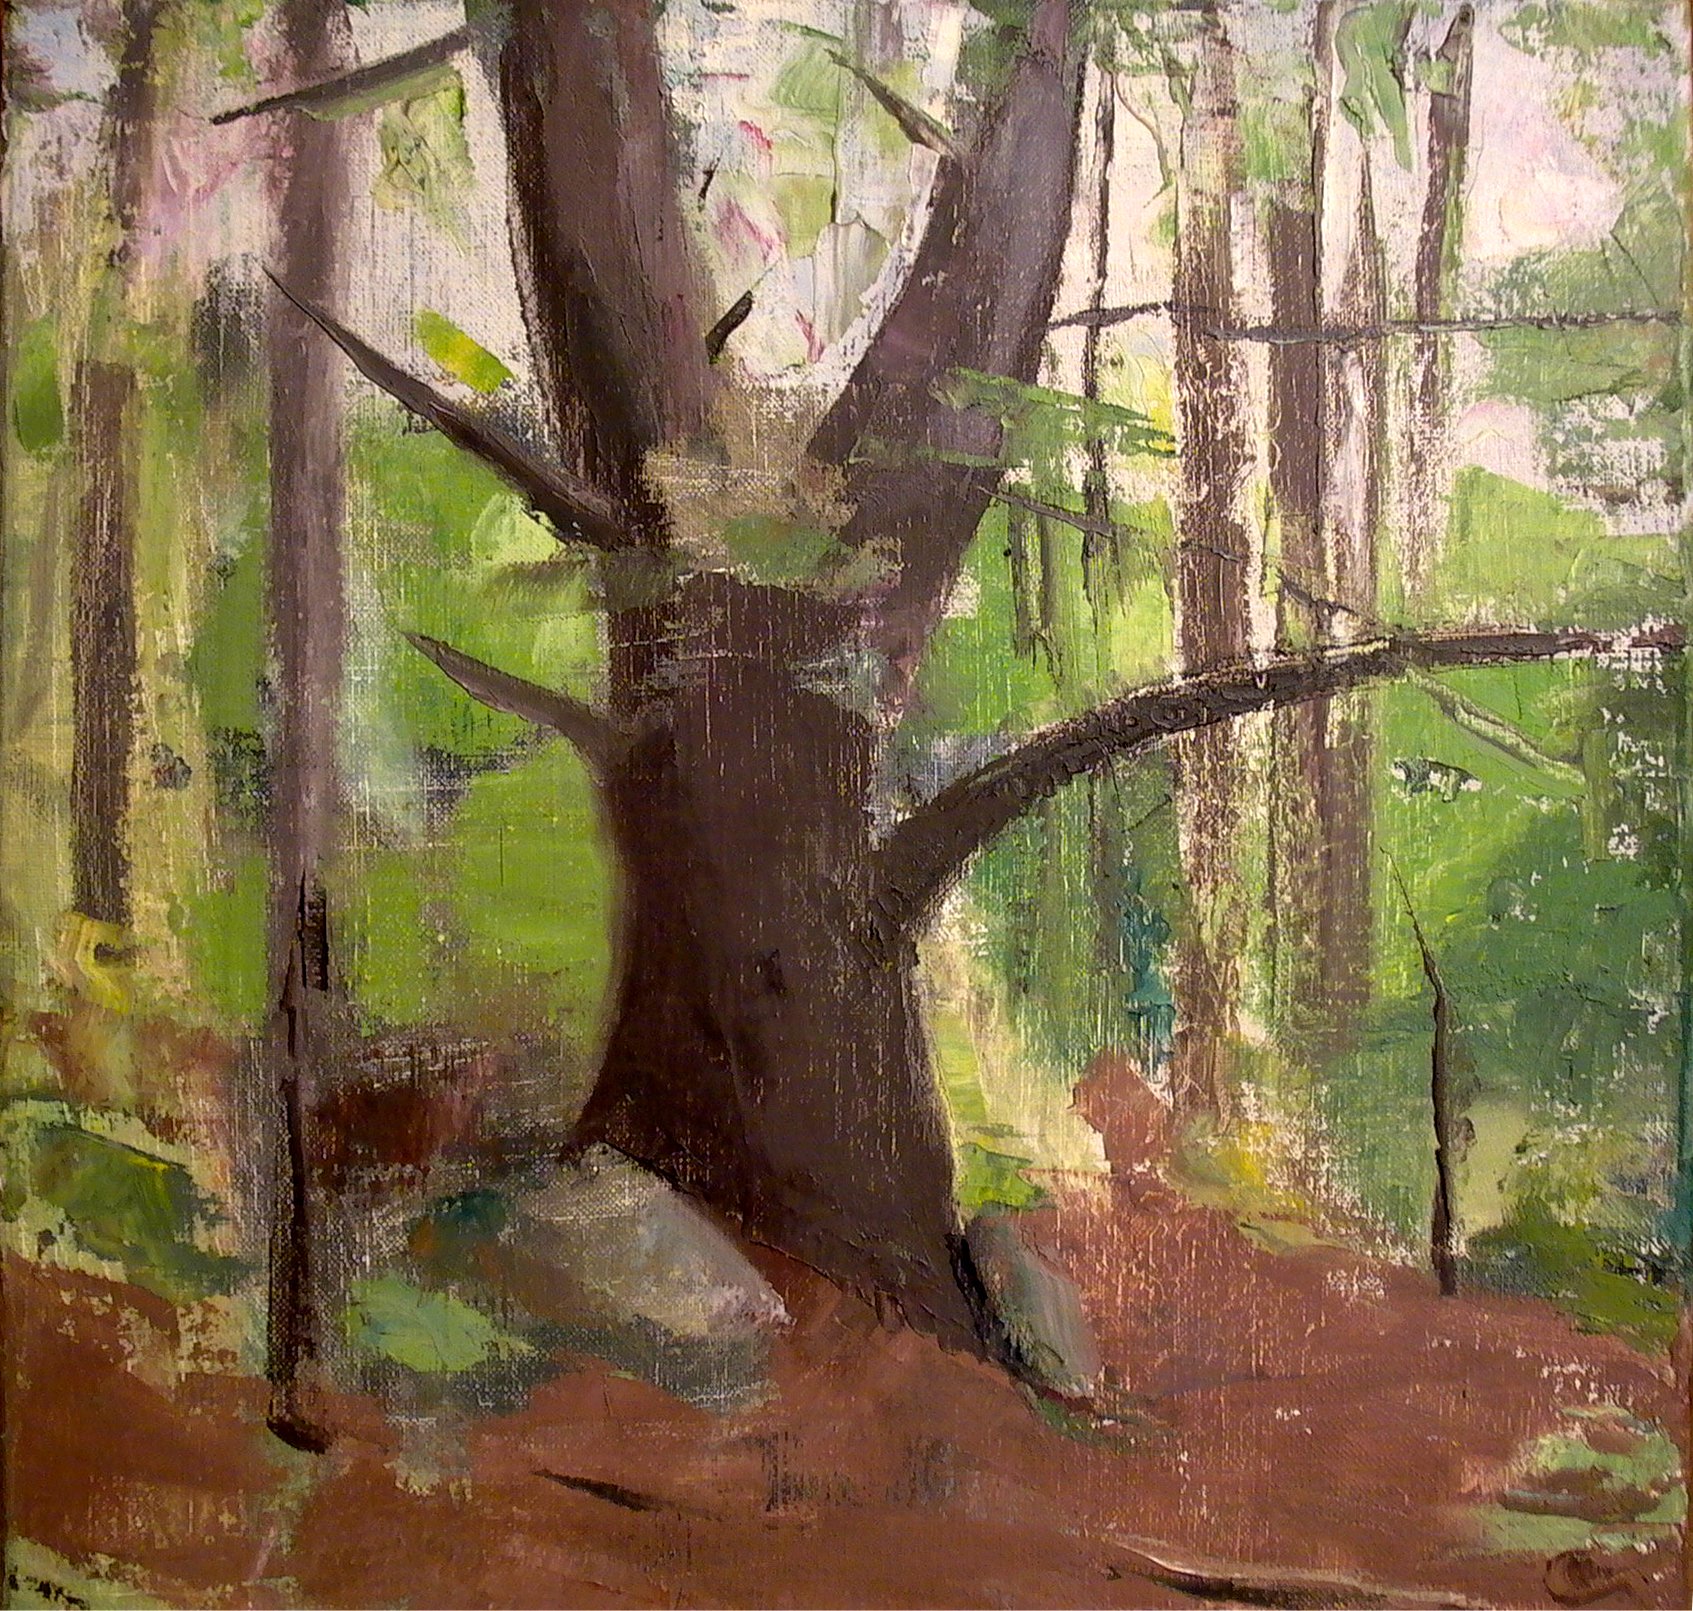 Pine Tree Trunk, 14" x 14", oil on linen, 1998.